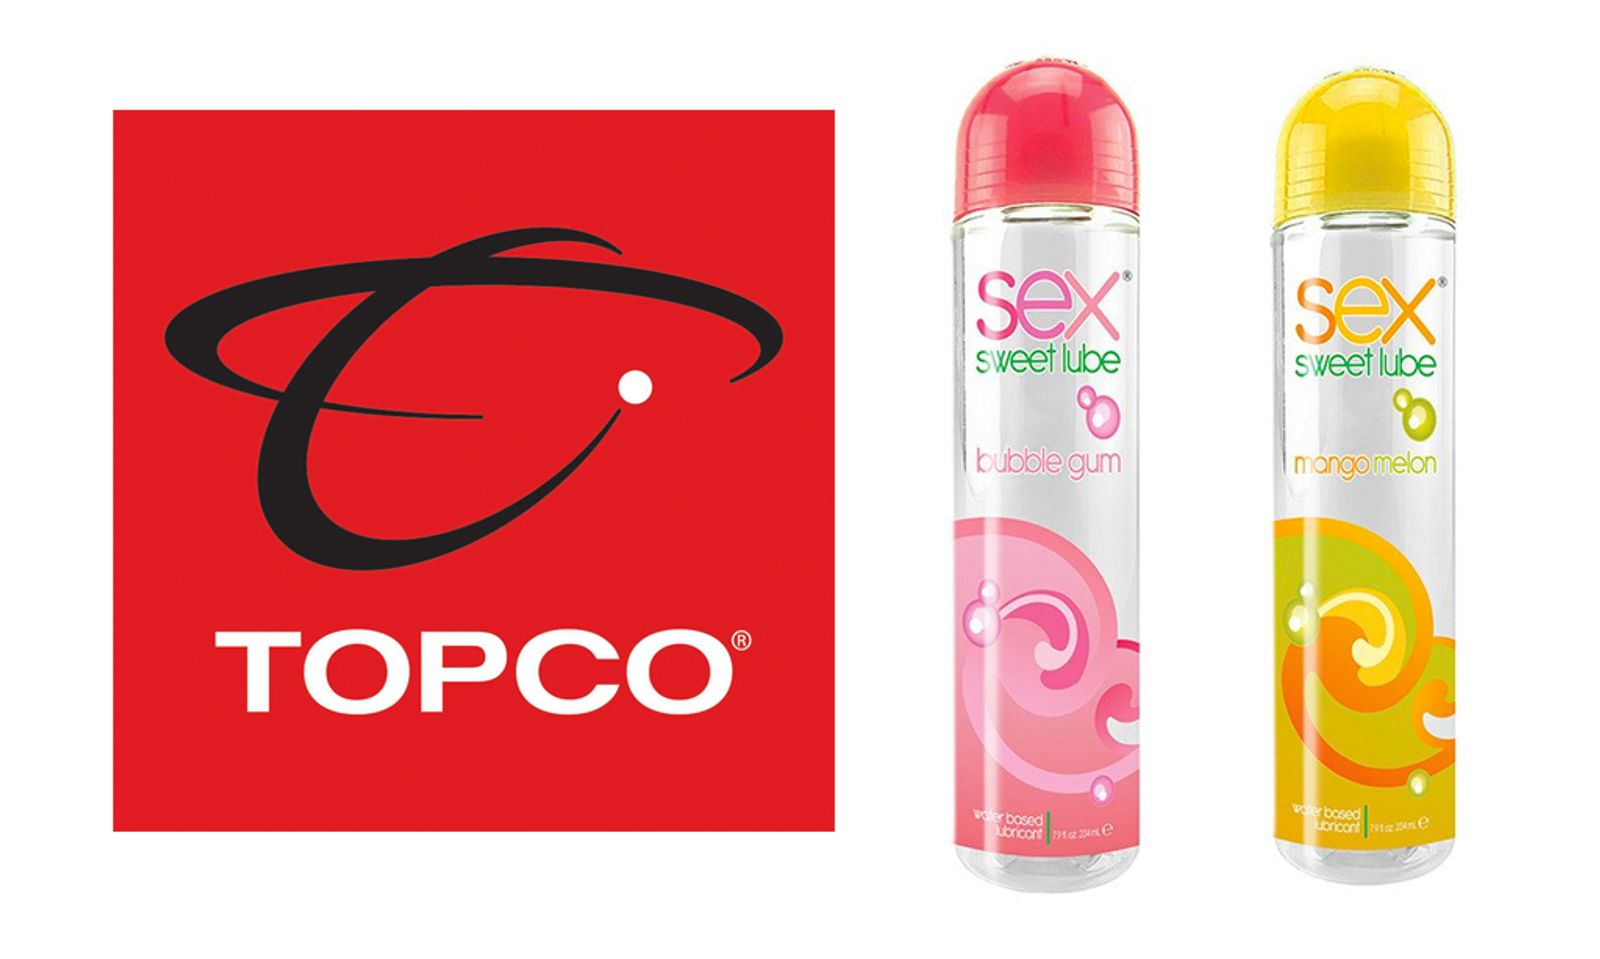 Topco’s Sex Sweet Flavored Lube Designated CE Compliant